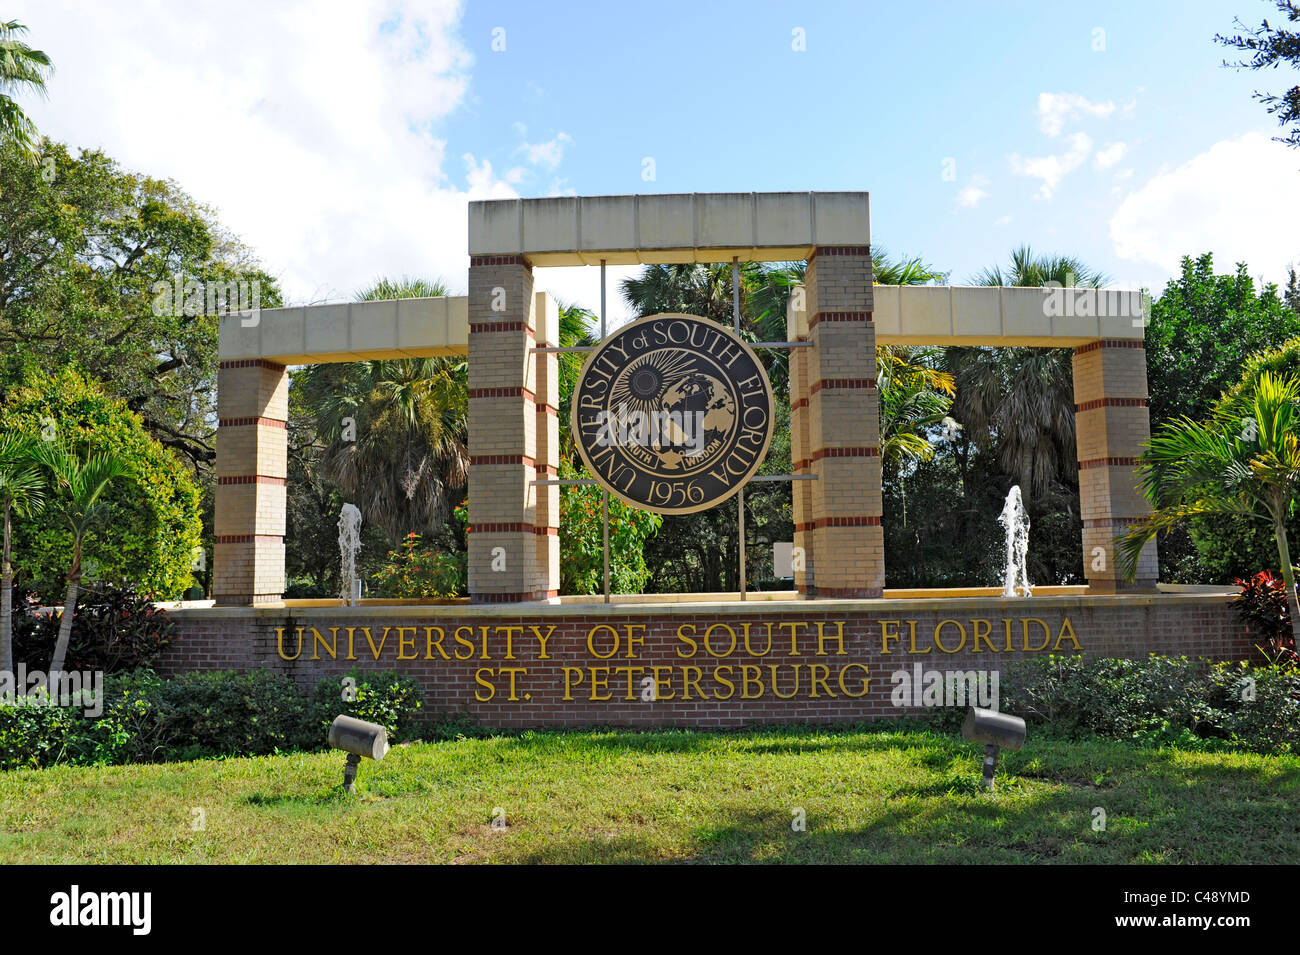 University Of South Florida St Petersburg Florida Stock Photo Alamy